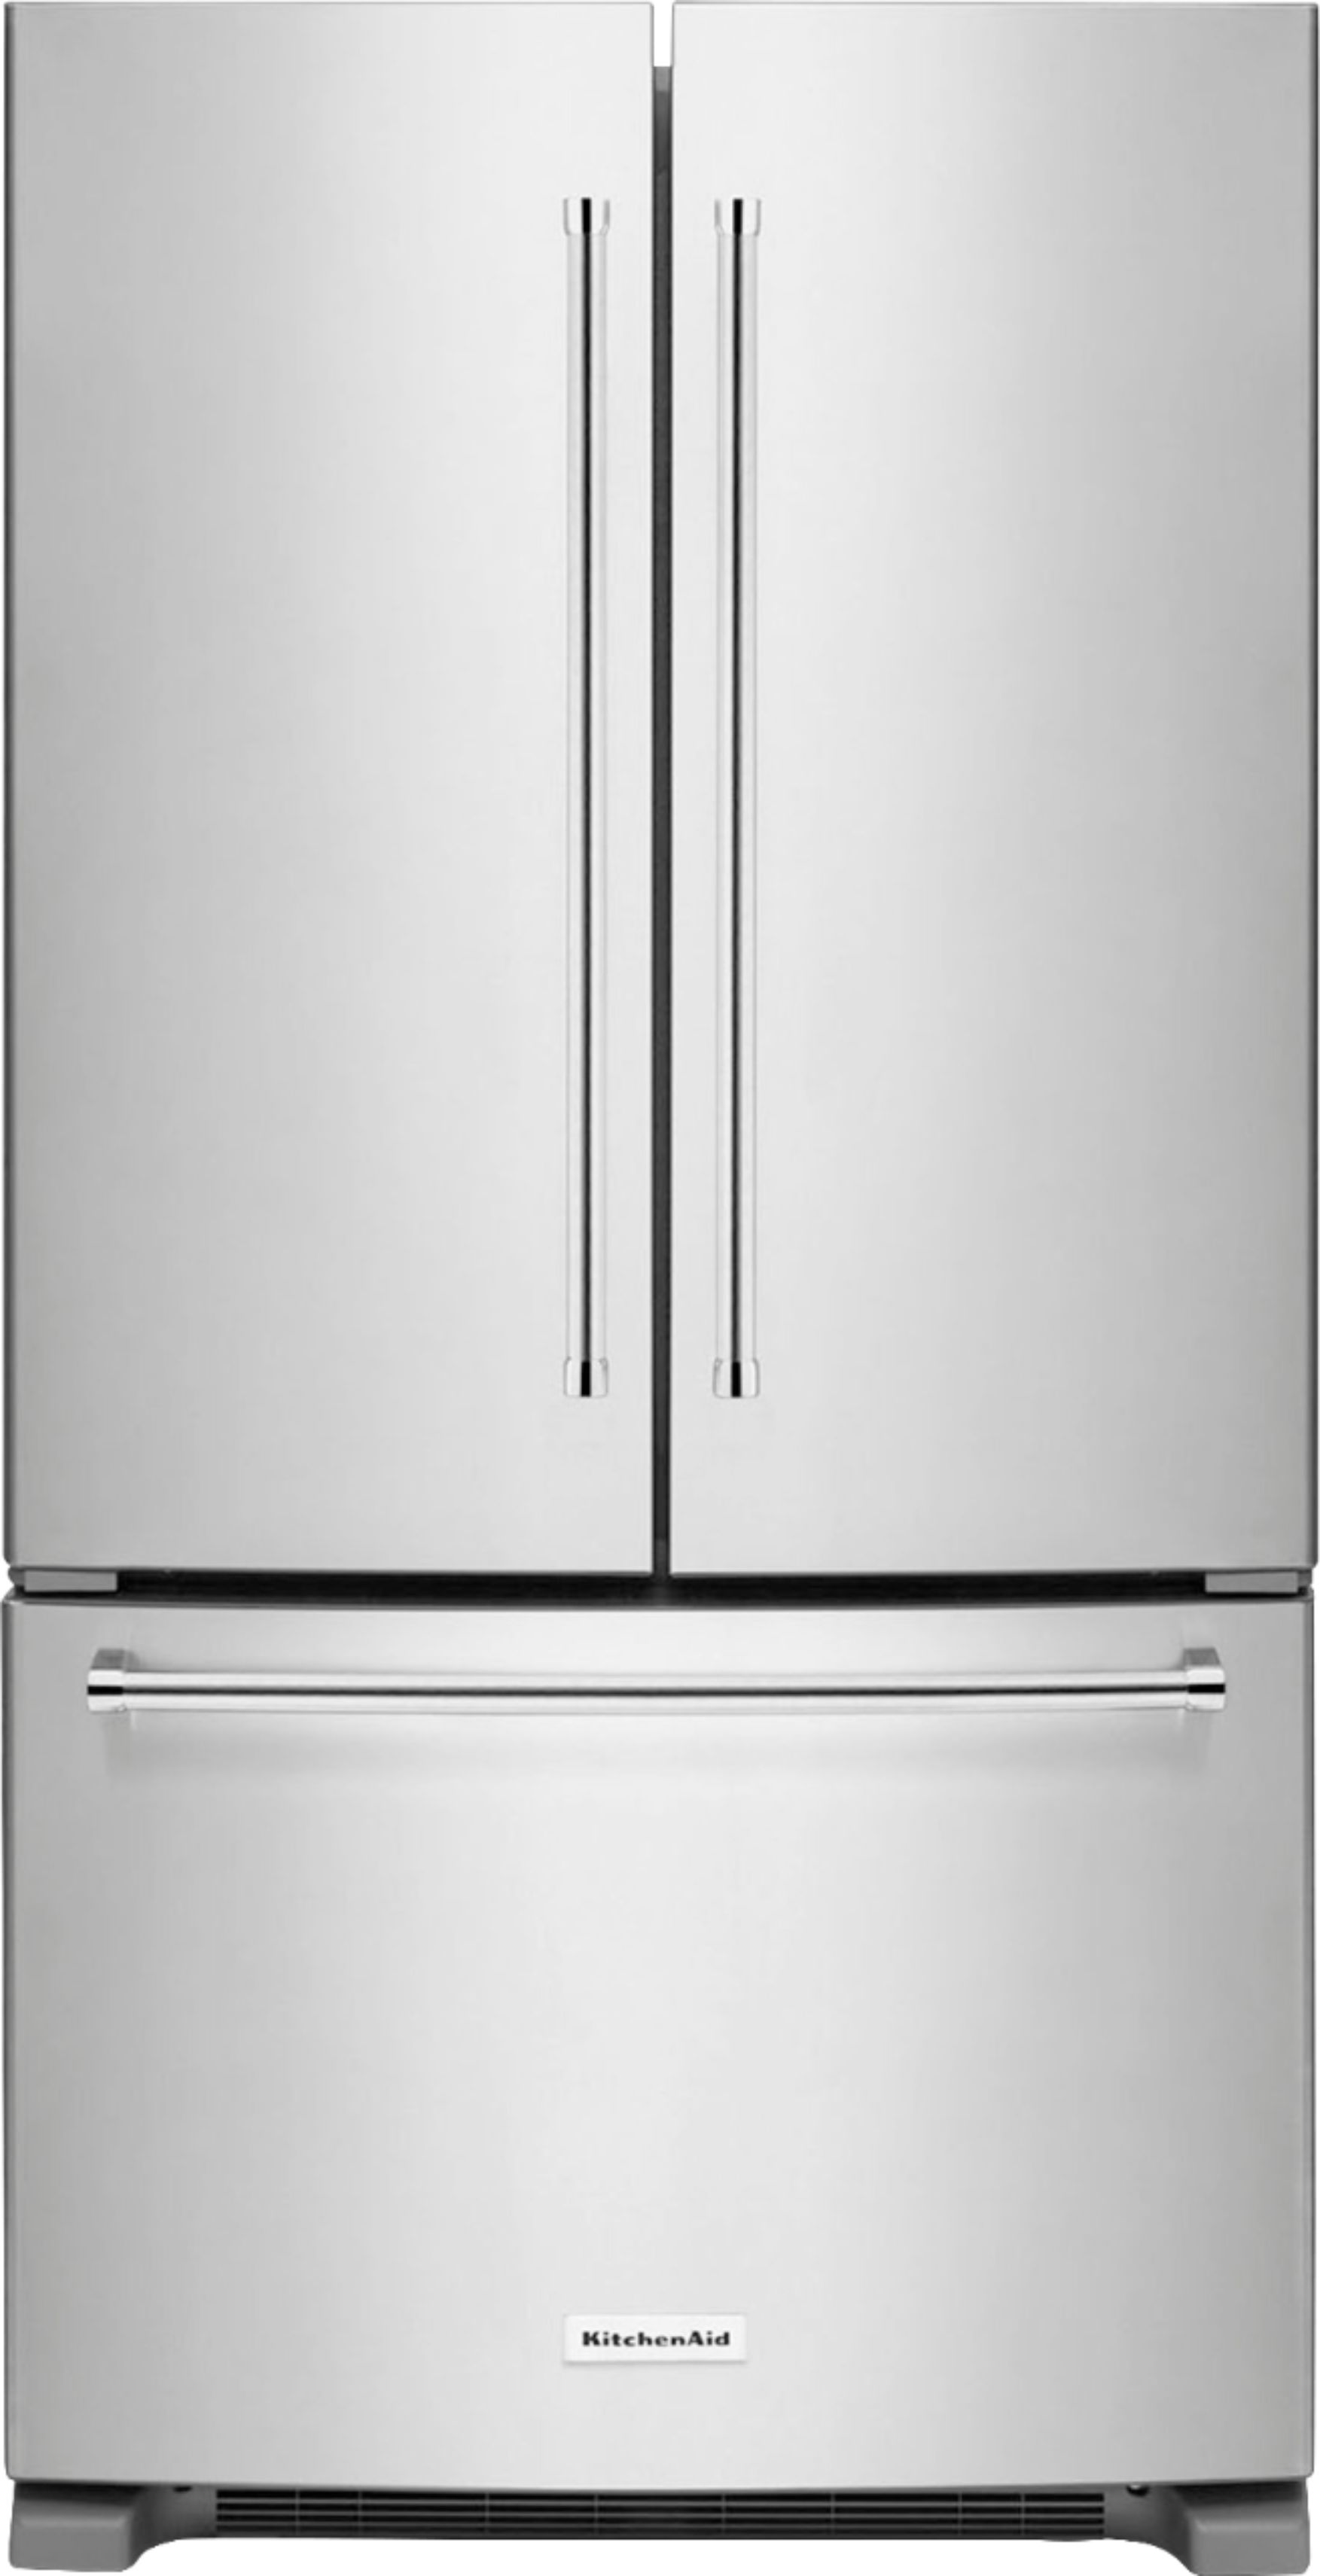 KitchenAid 20 Ft. French Door Counter-Depth Refrigerator steel - Best Buy